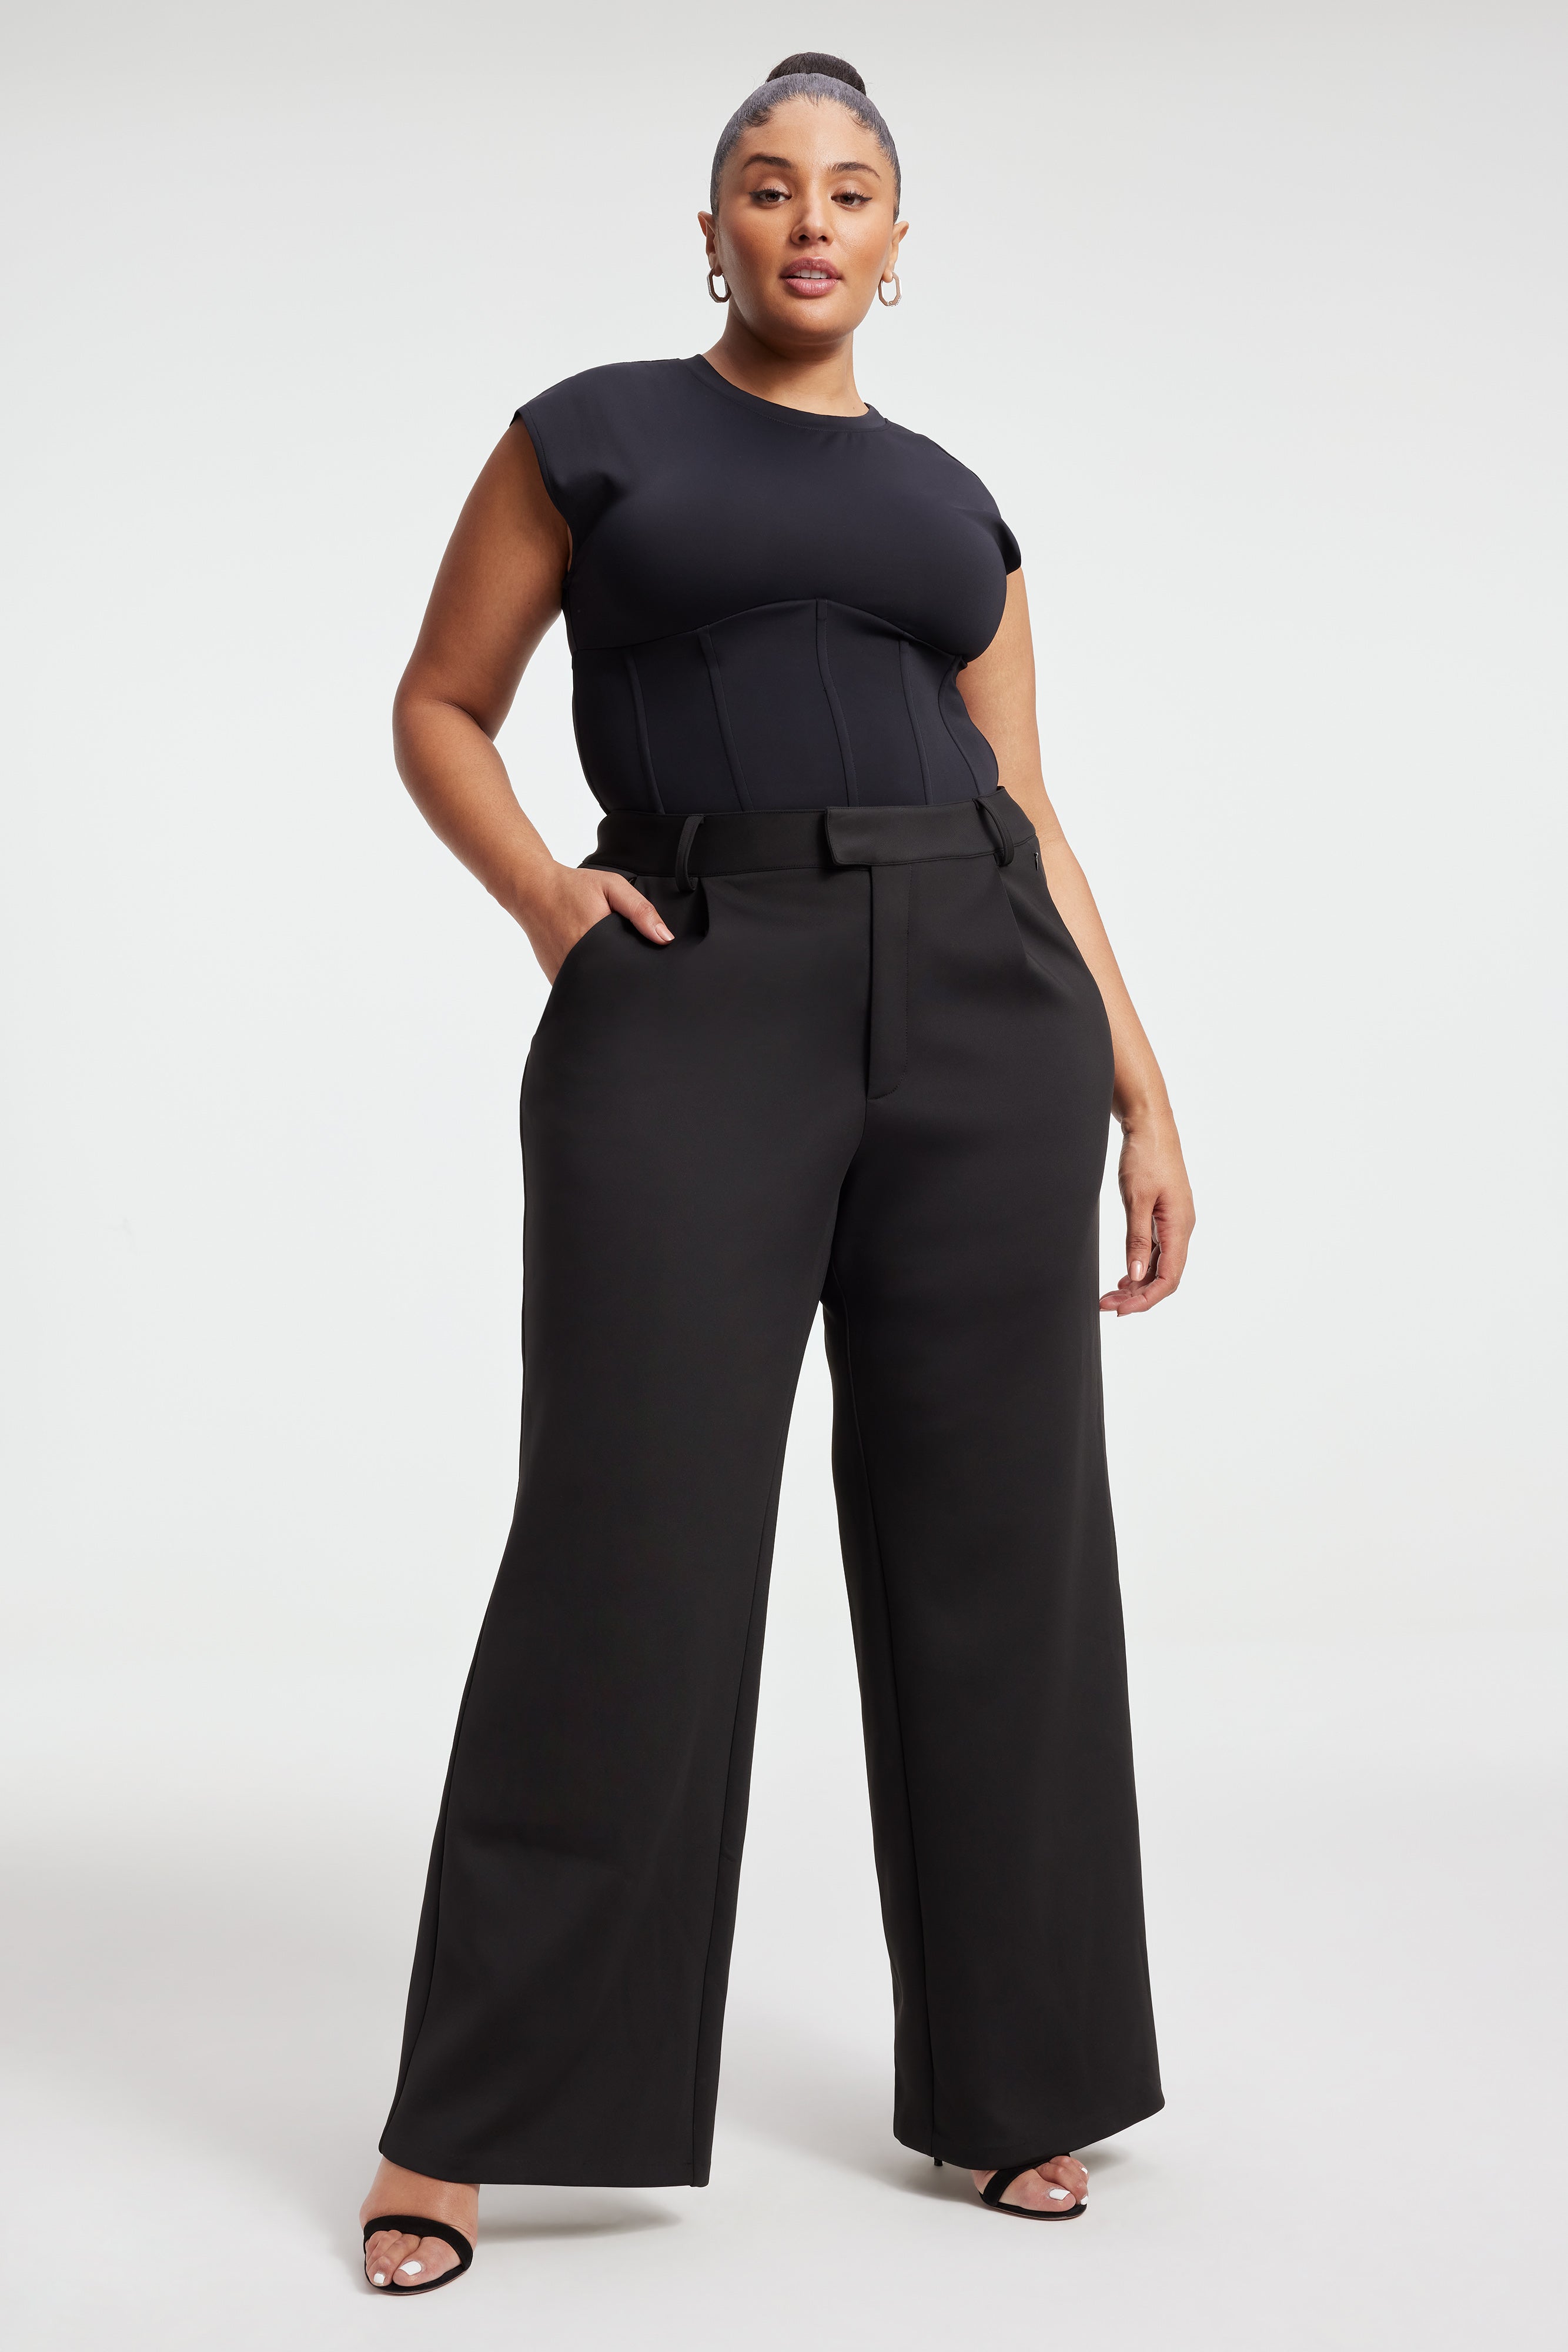 Black Bodysuit Top with Velvet Polka Dots on Large Ruffle and Illusion  Neckline PRA 908_sale